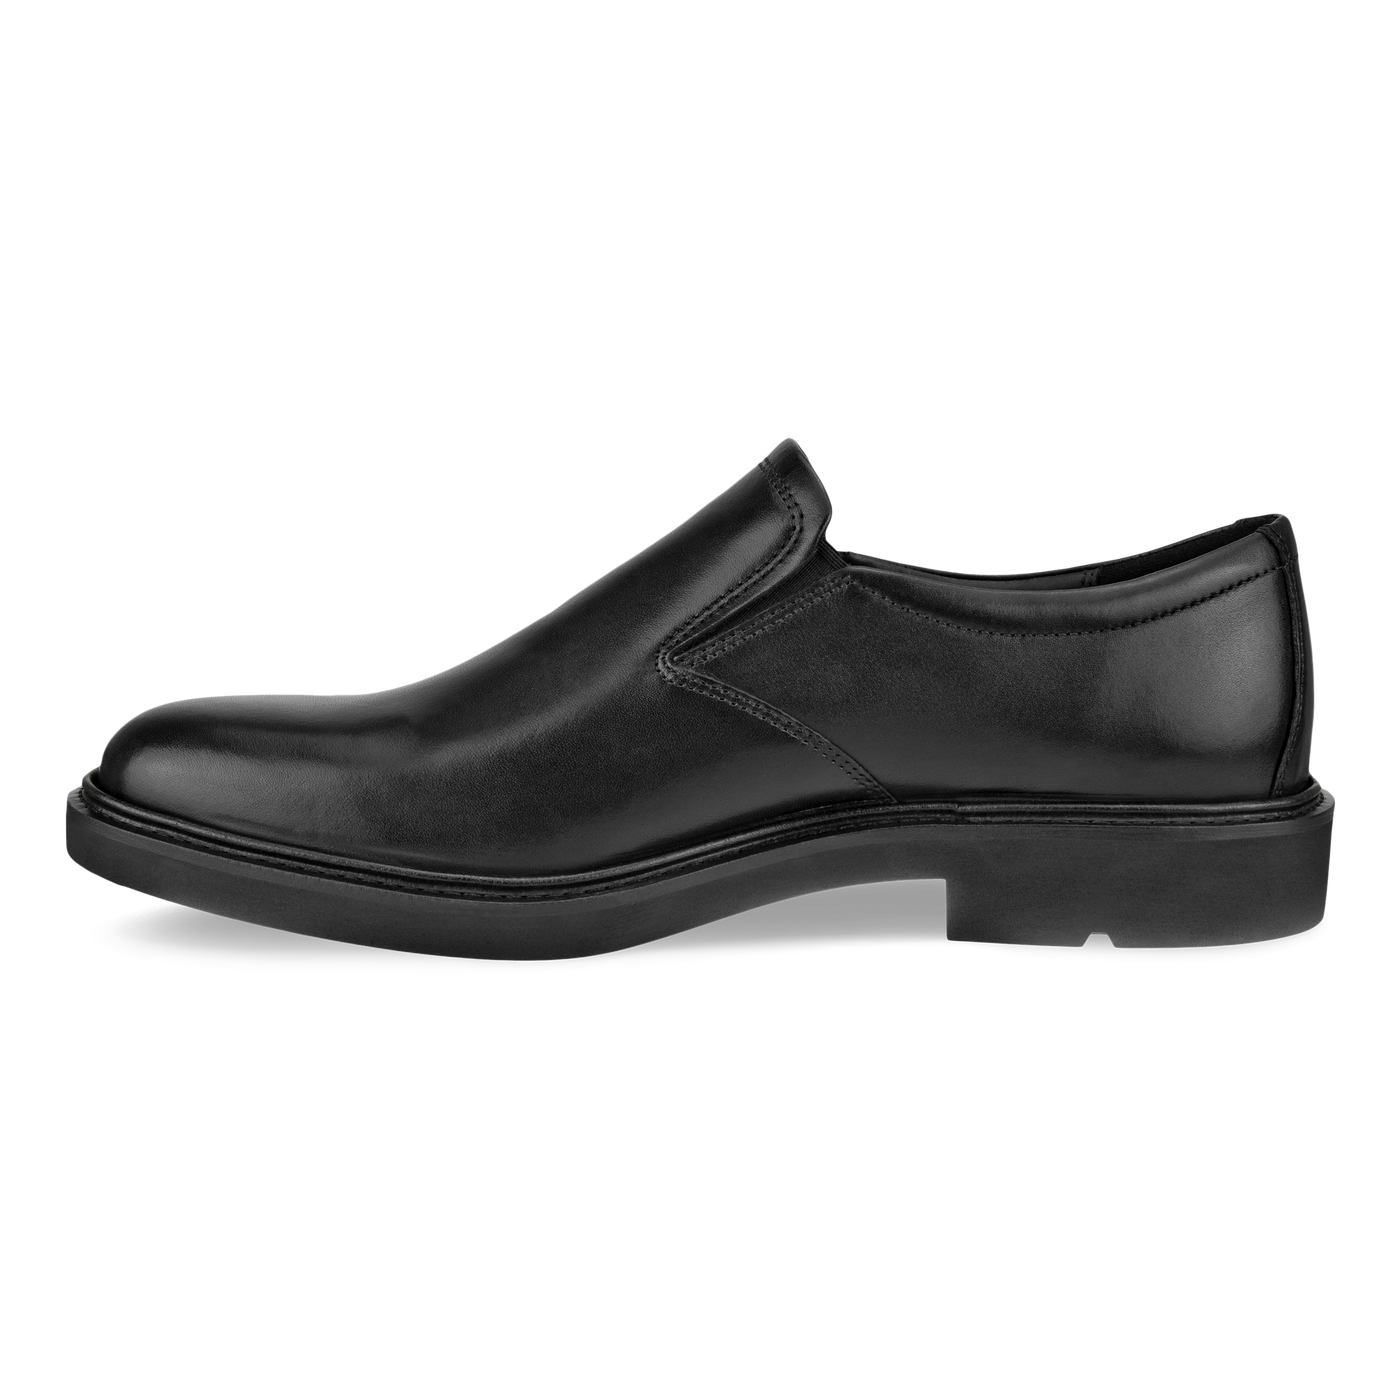 ECCO Men's Metropole London Slip-On Dress Shoes Black